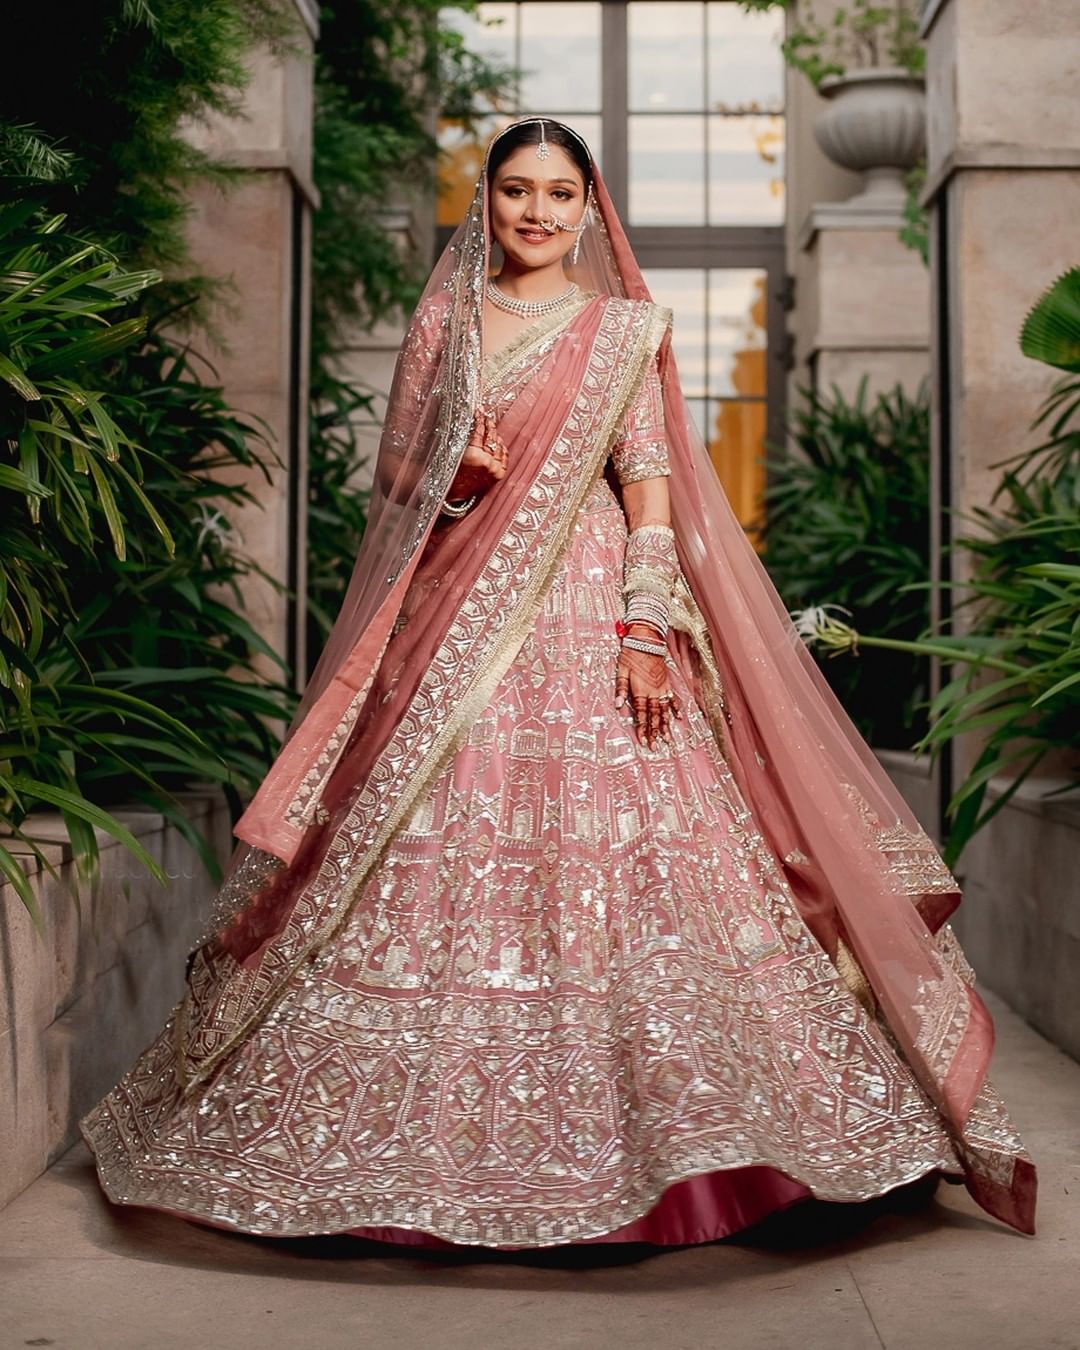 Bride Stuns In A Dusty Pink Stone-Studded Manish Malhotra Lehenga Pairs With Sleek Diamond Jewellery